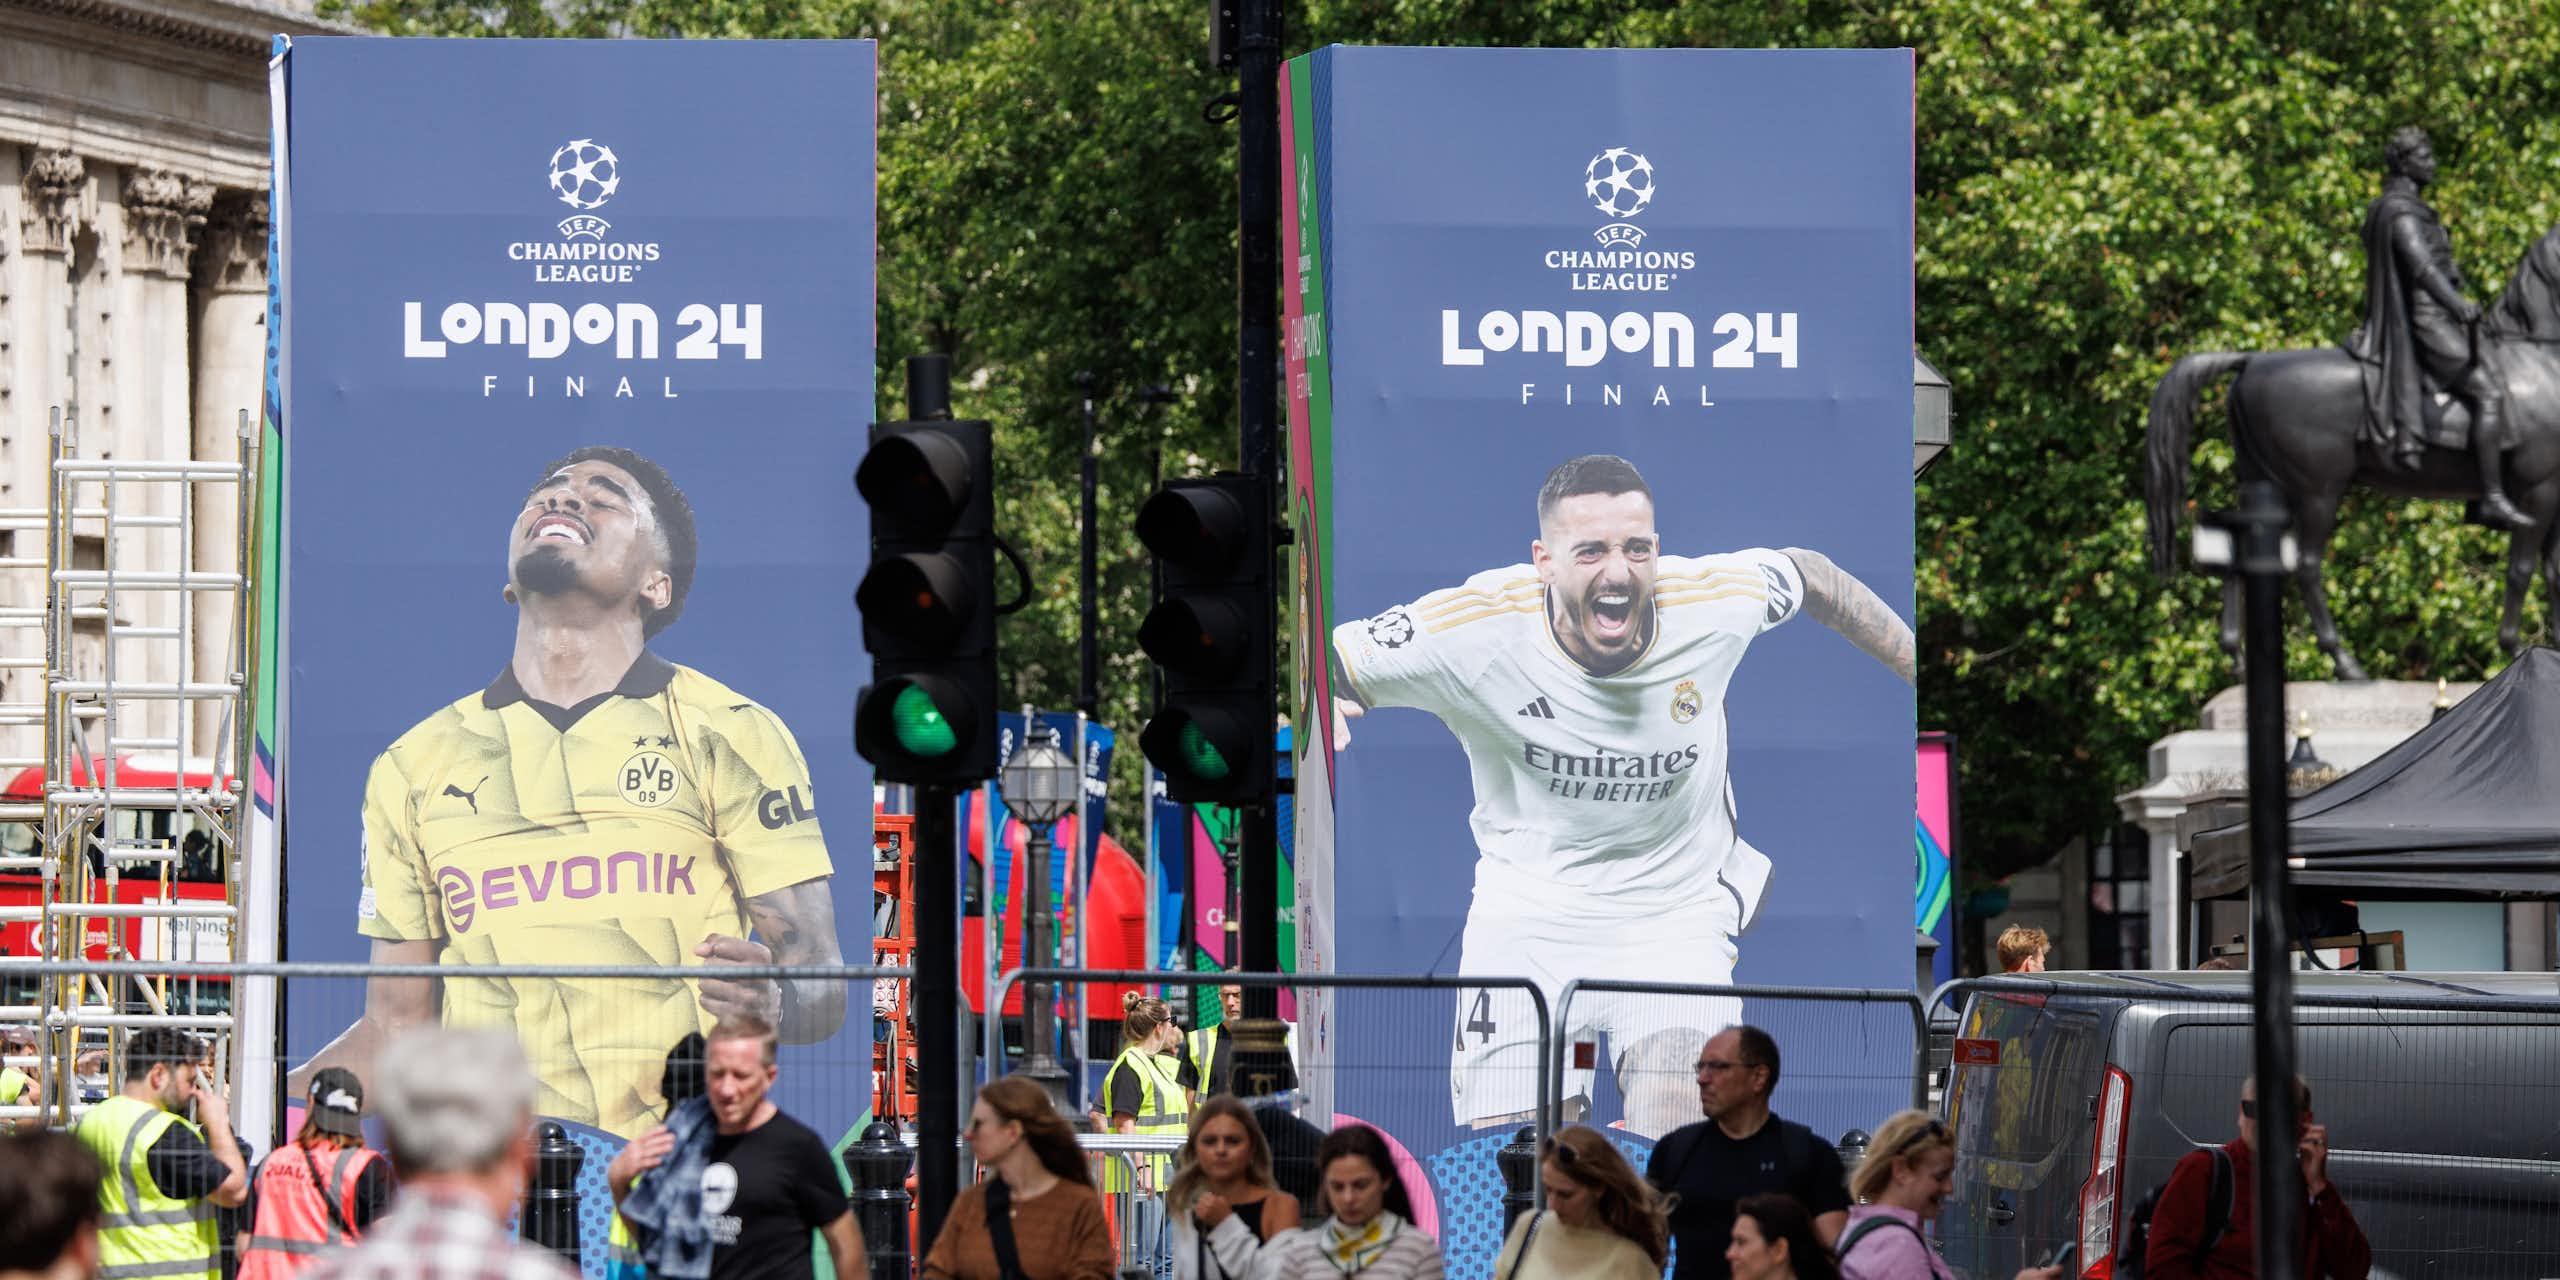 Pedestrians walk past Champions League banners in London.